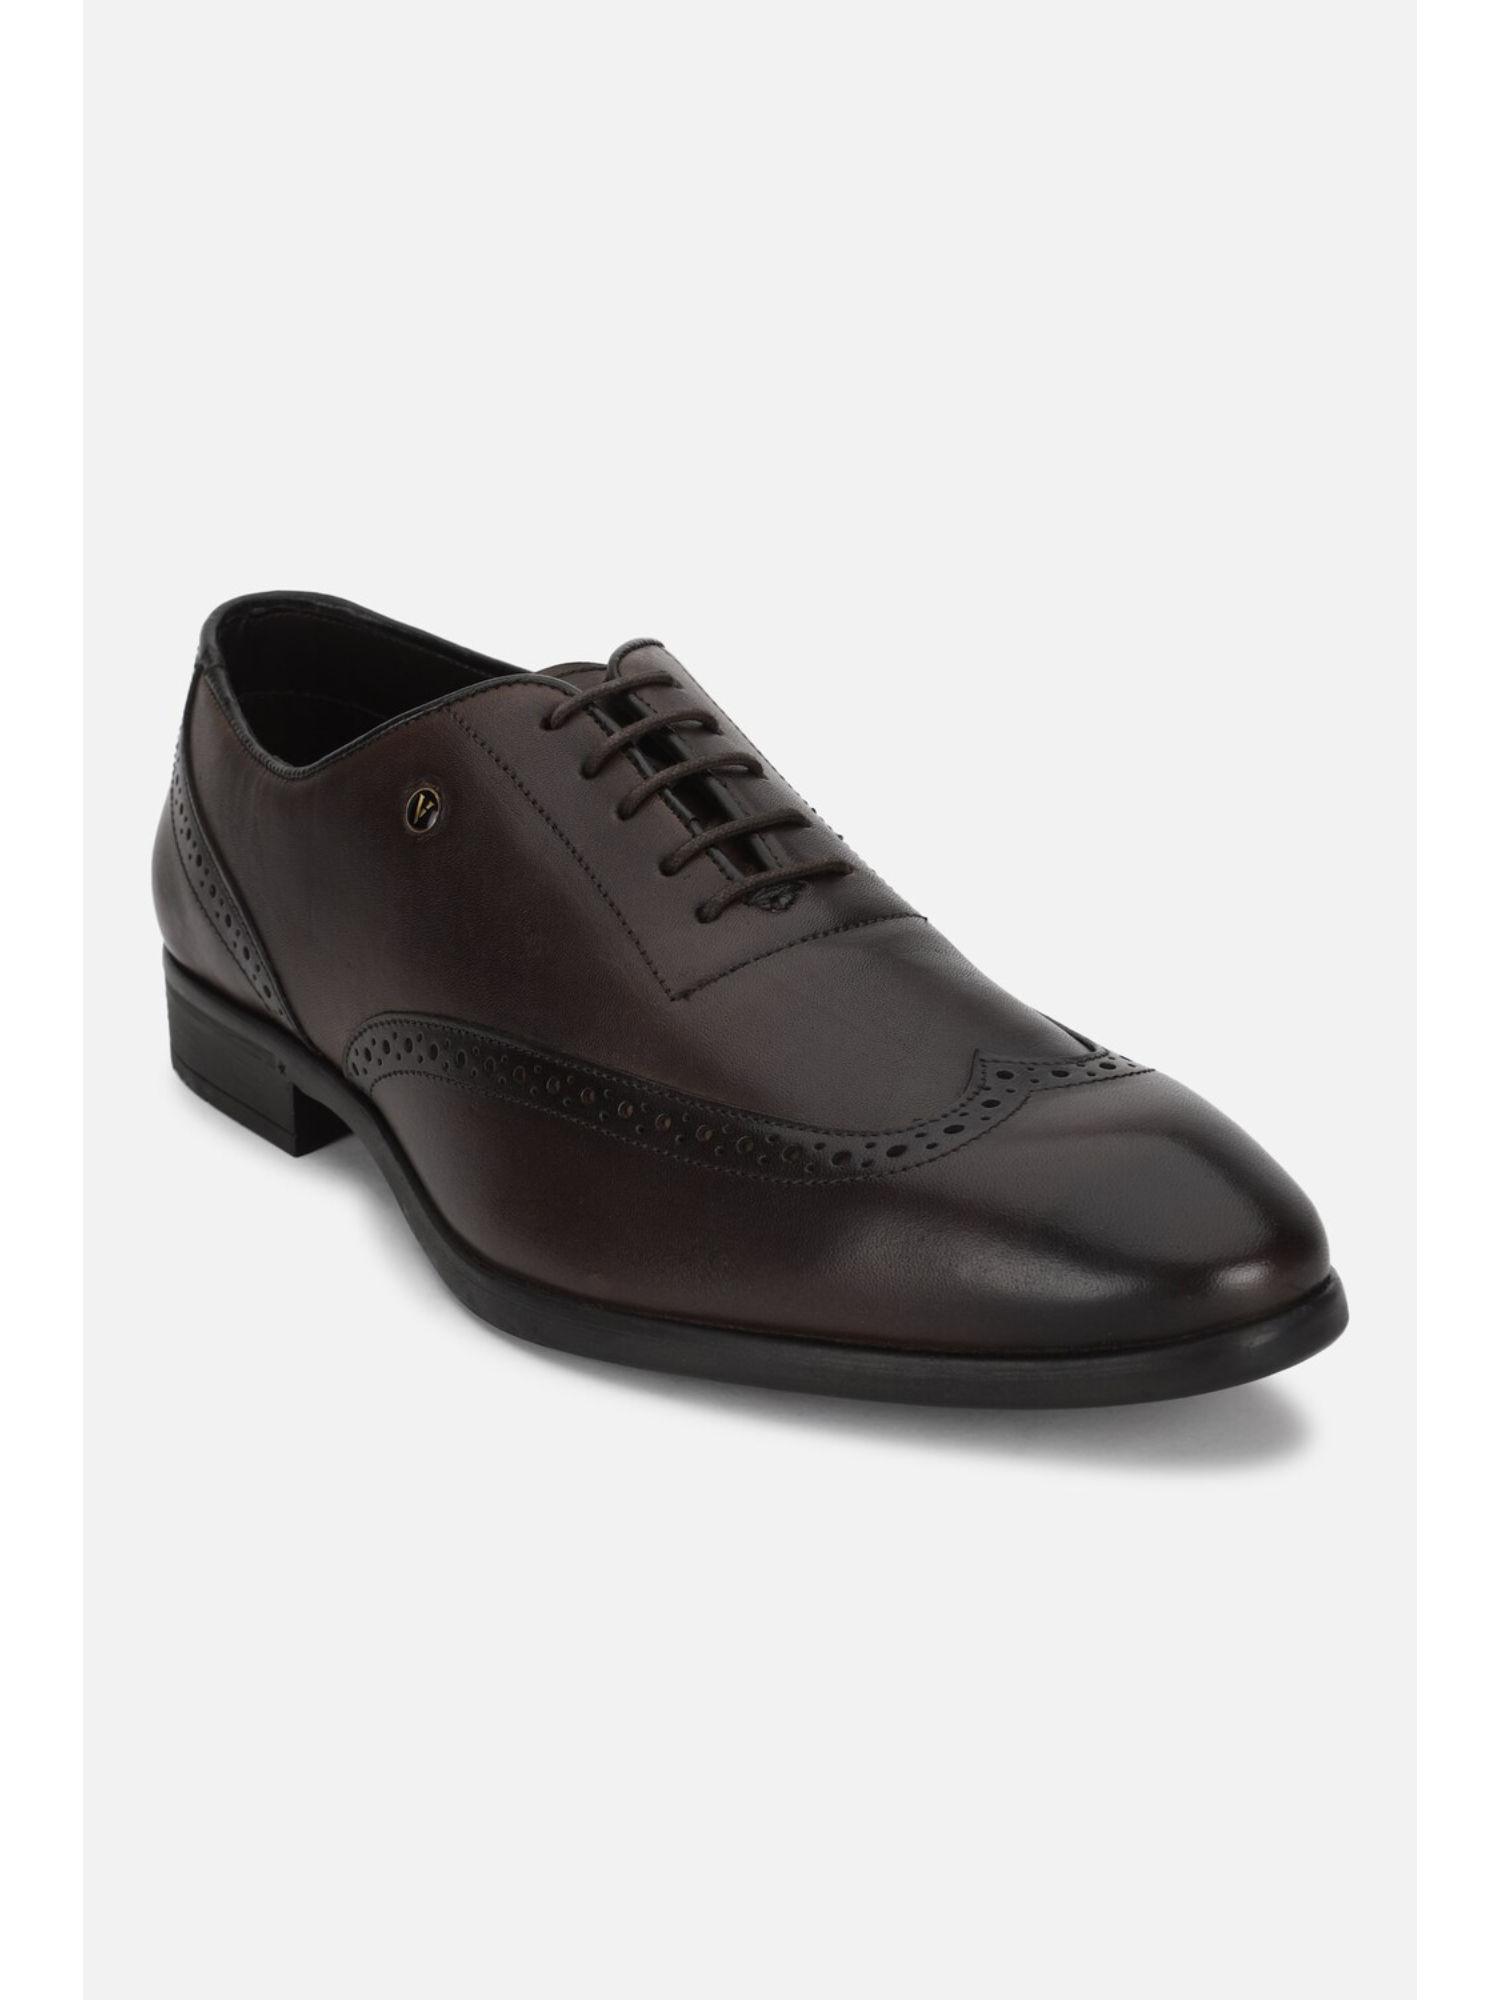 men-brown-formal-brogue-shoes